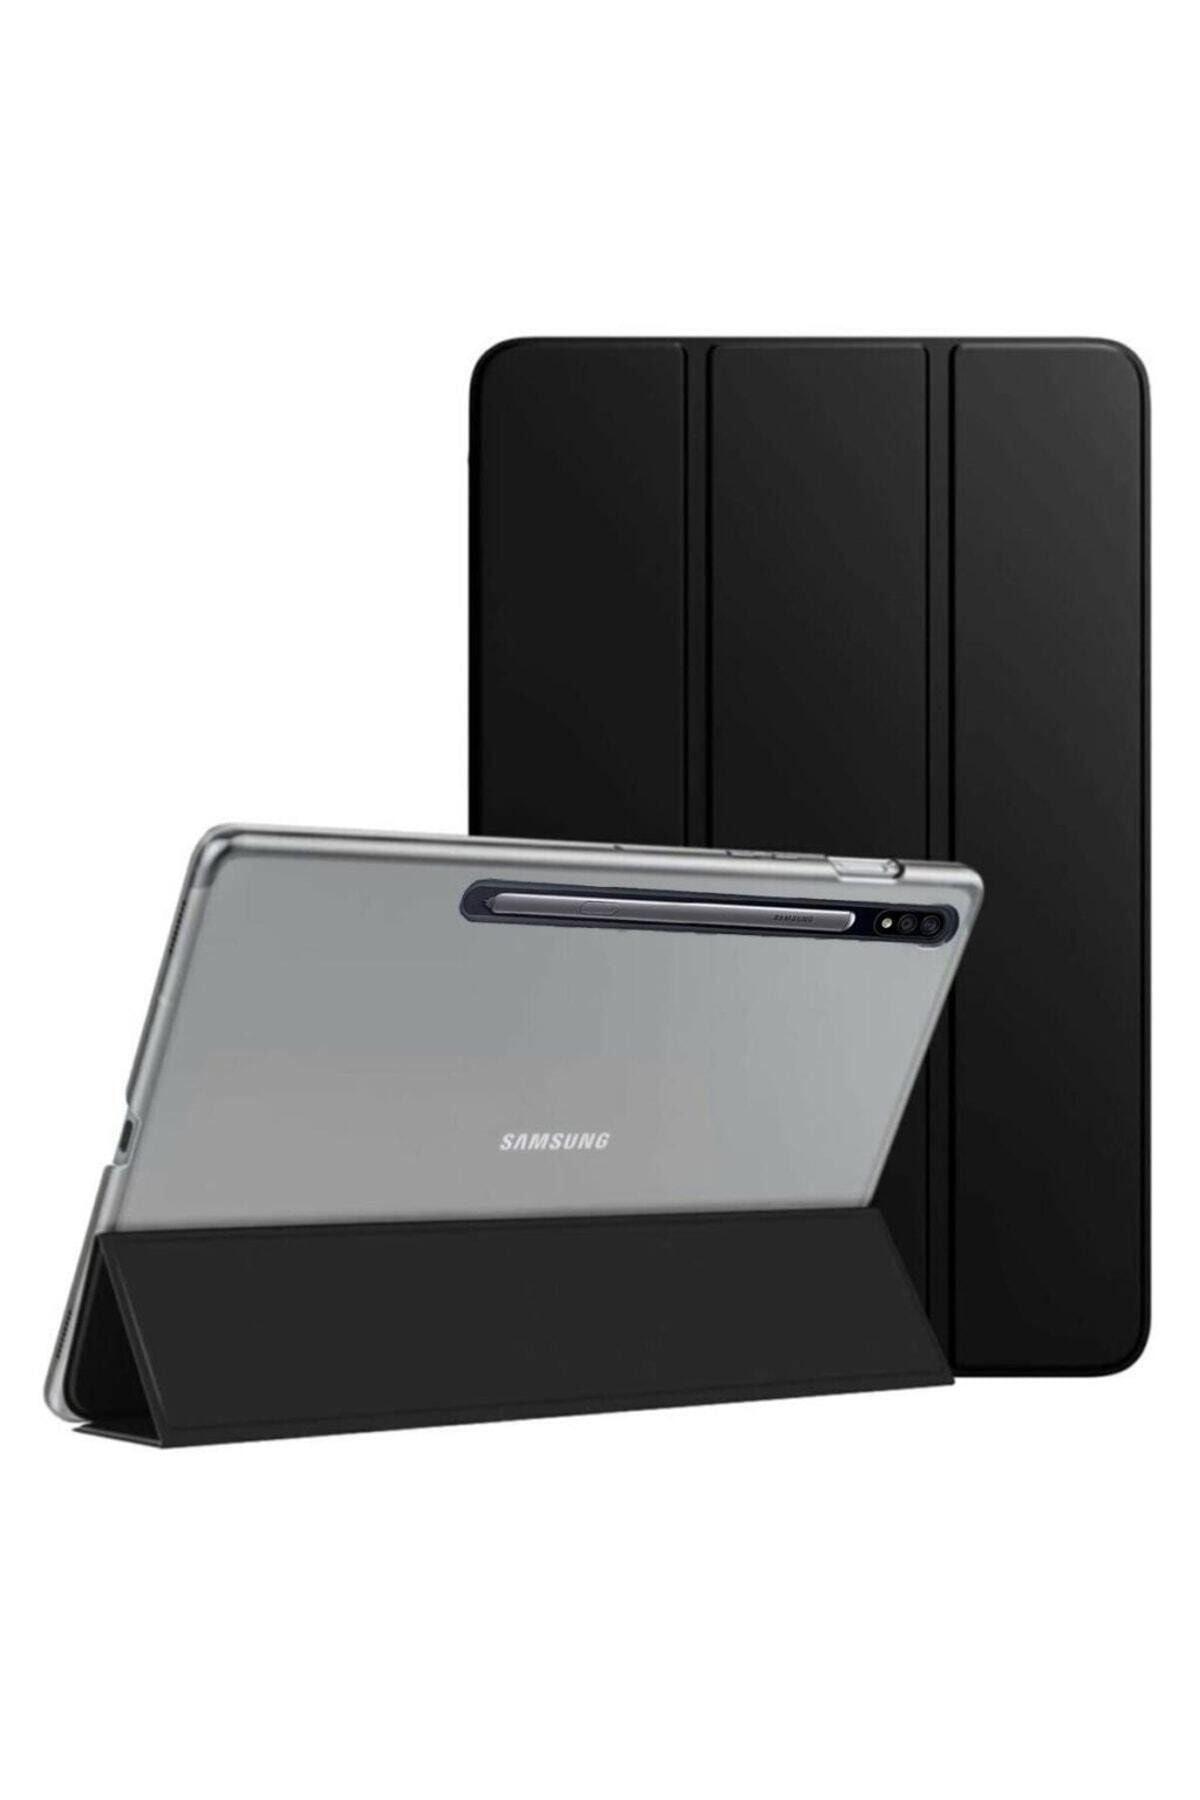 TEKNETSTORE Samsung Galaxy Tab S7 Fe Lte T730 T735 T737 Tablet Uyumlu Flip Smart Standlı Akıllı Kılıf